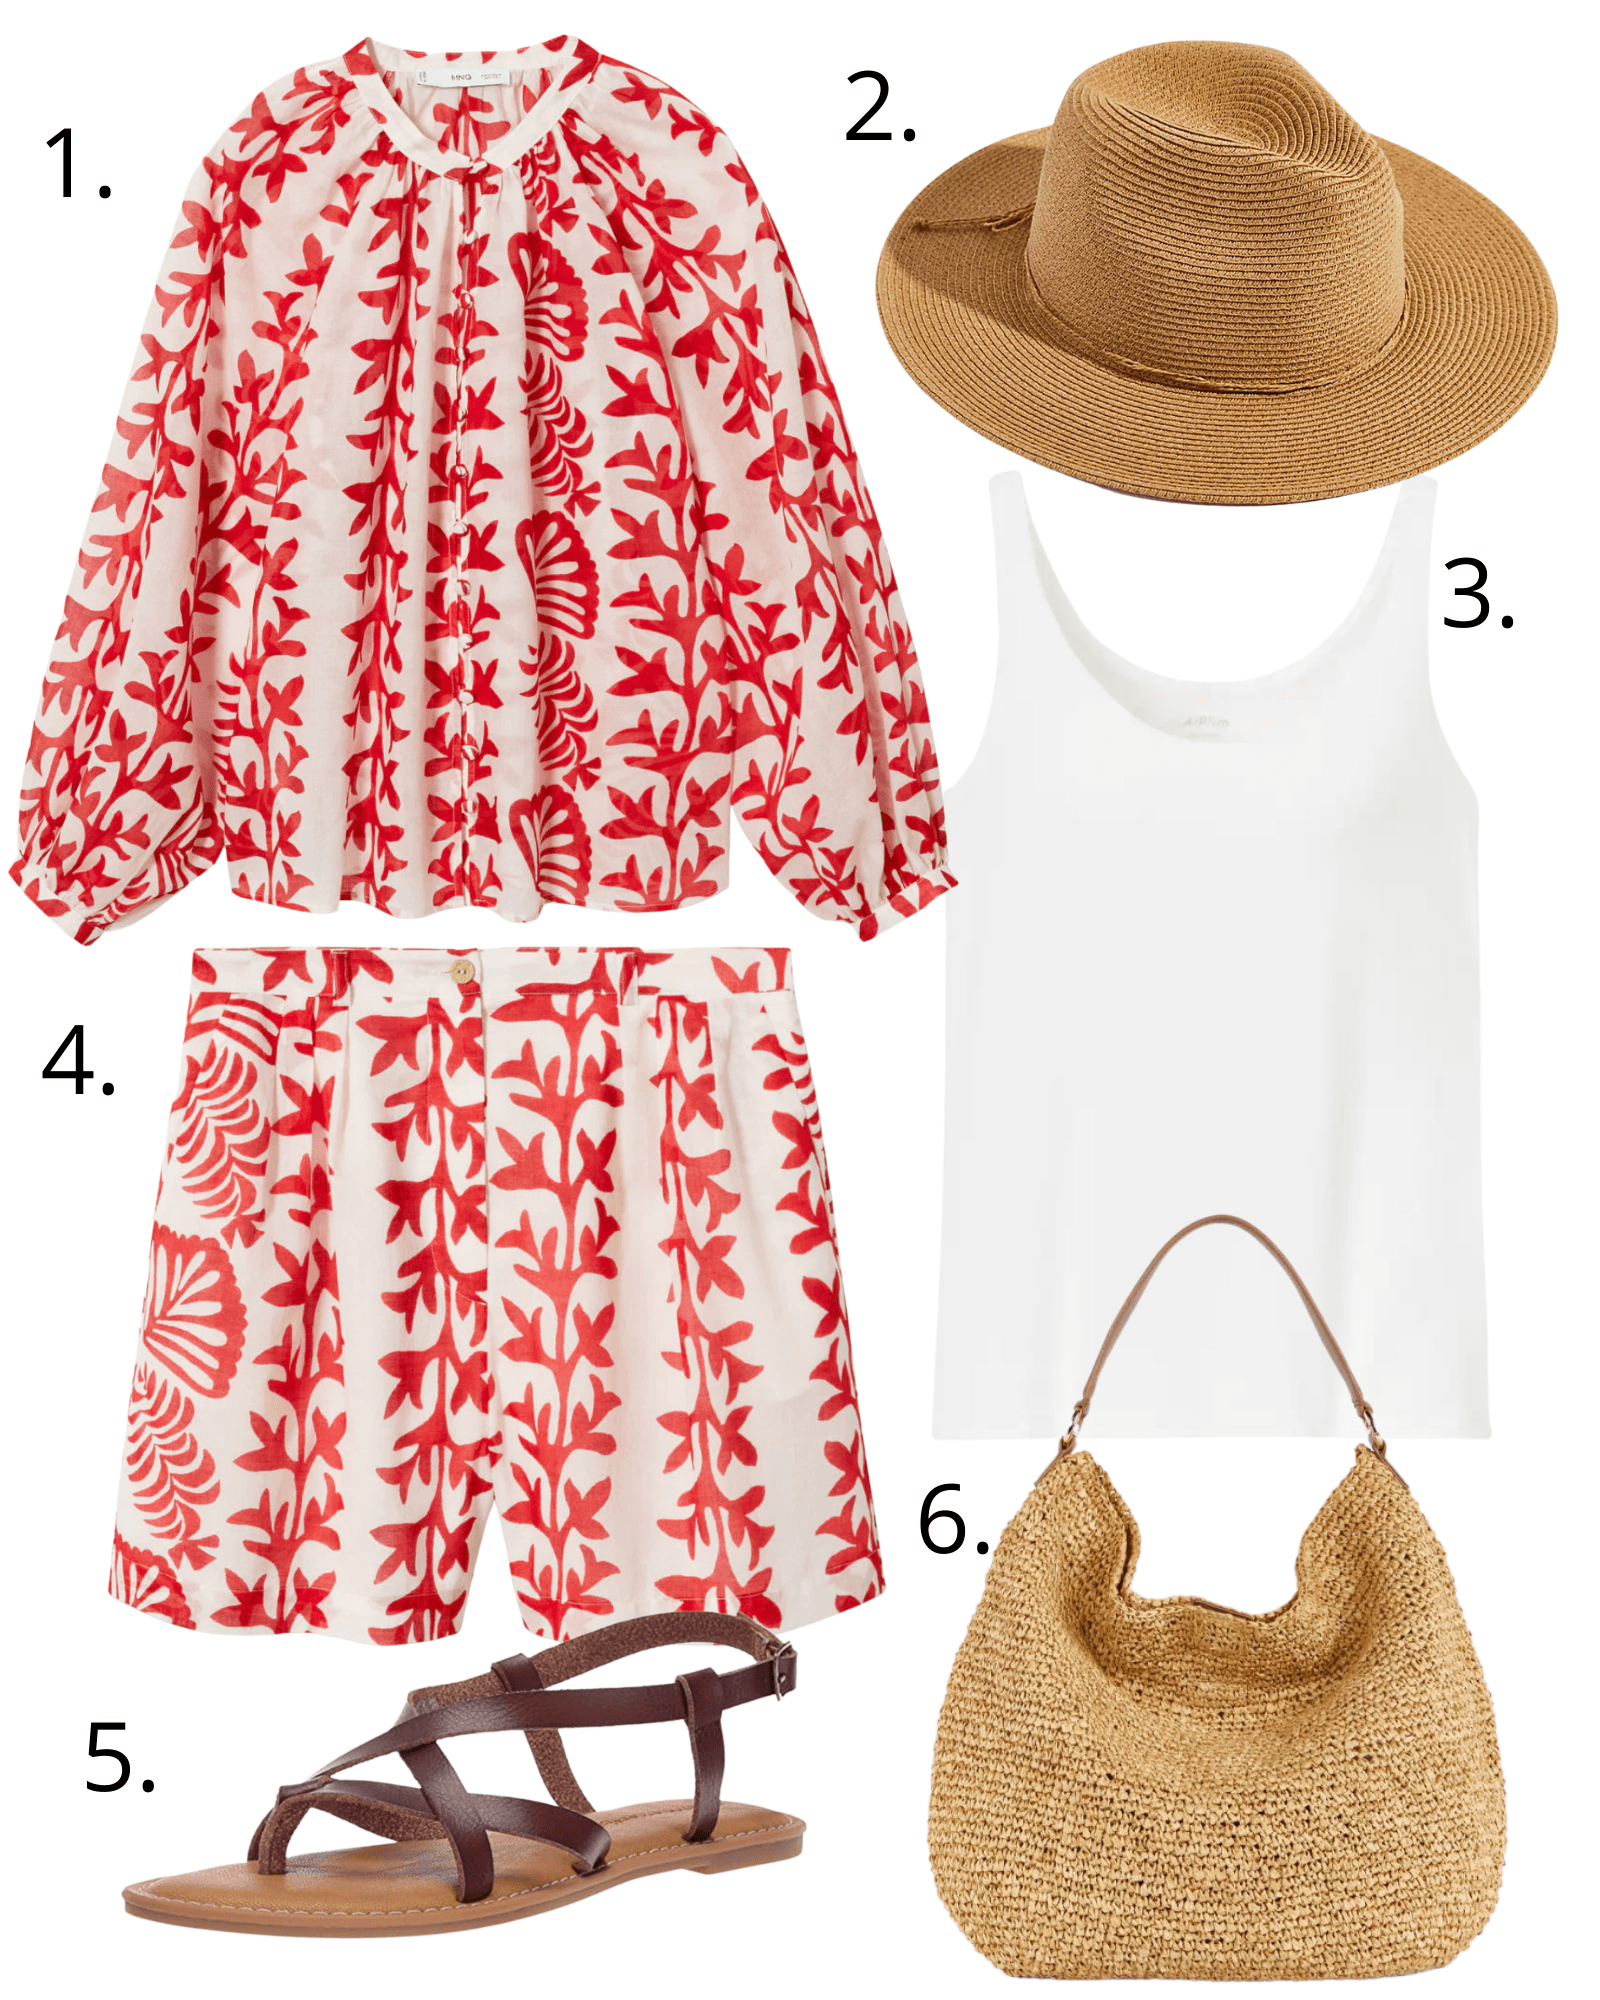 What to wear in a heatwave